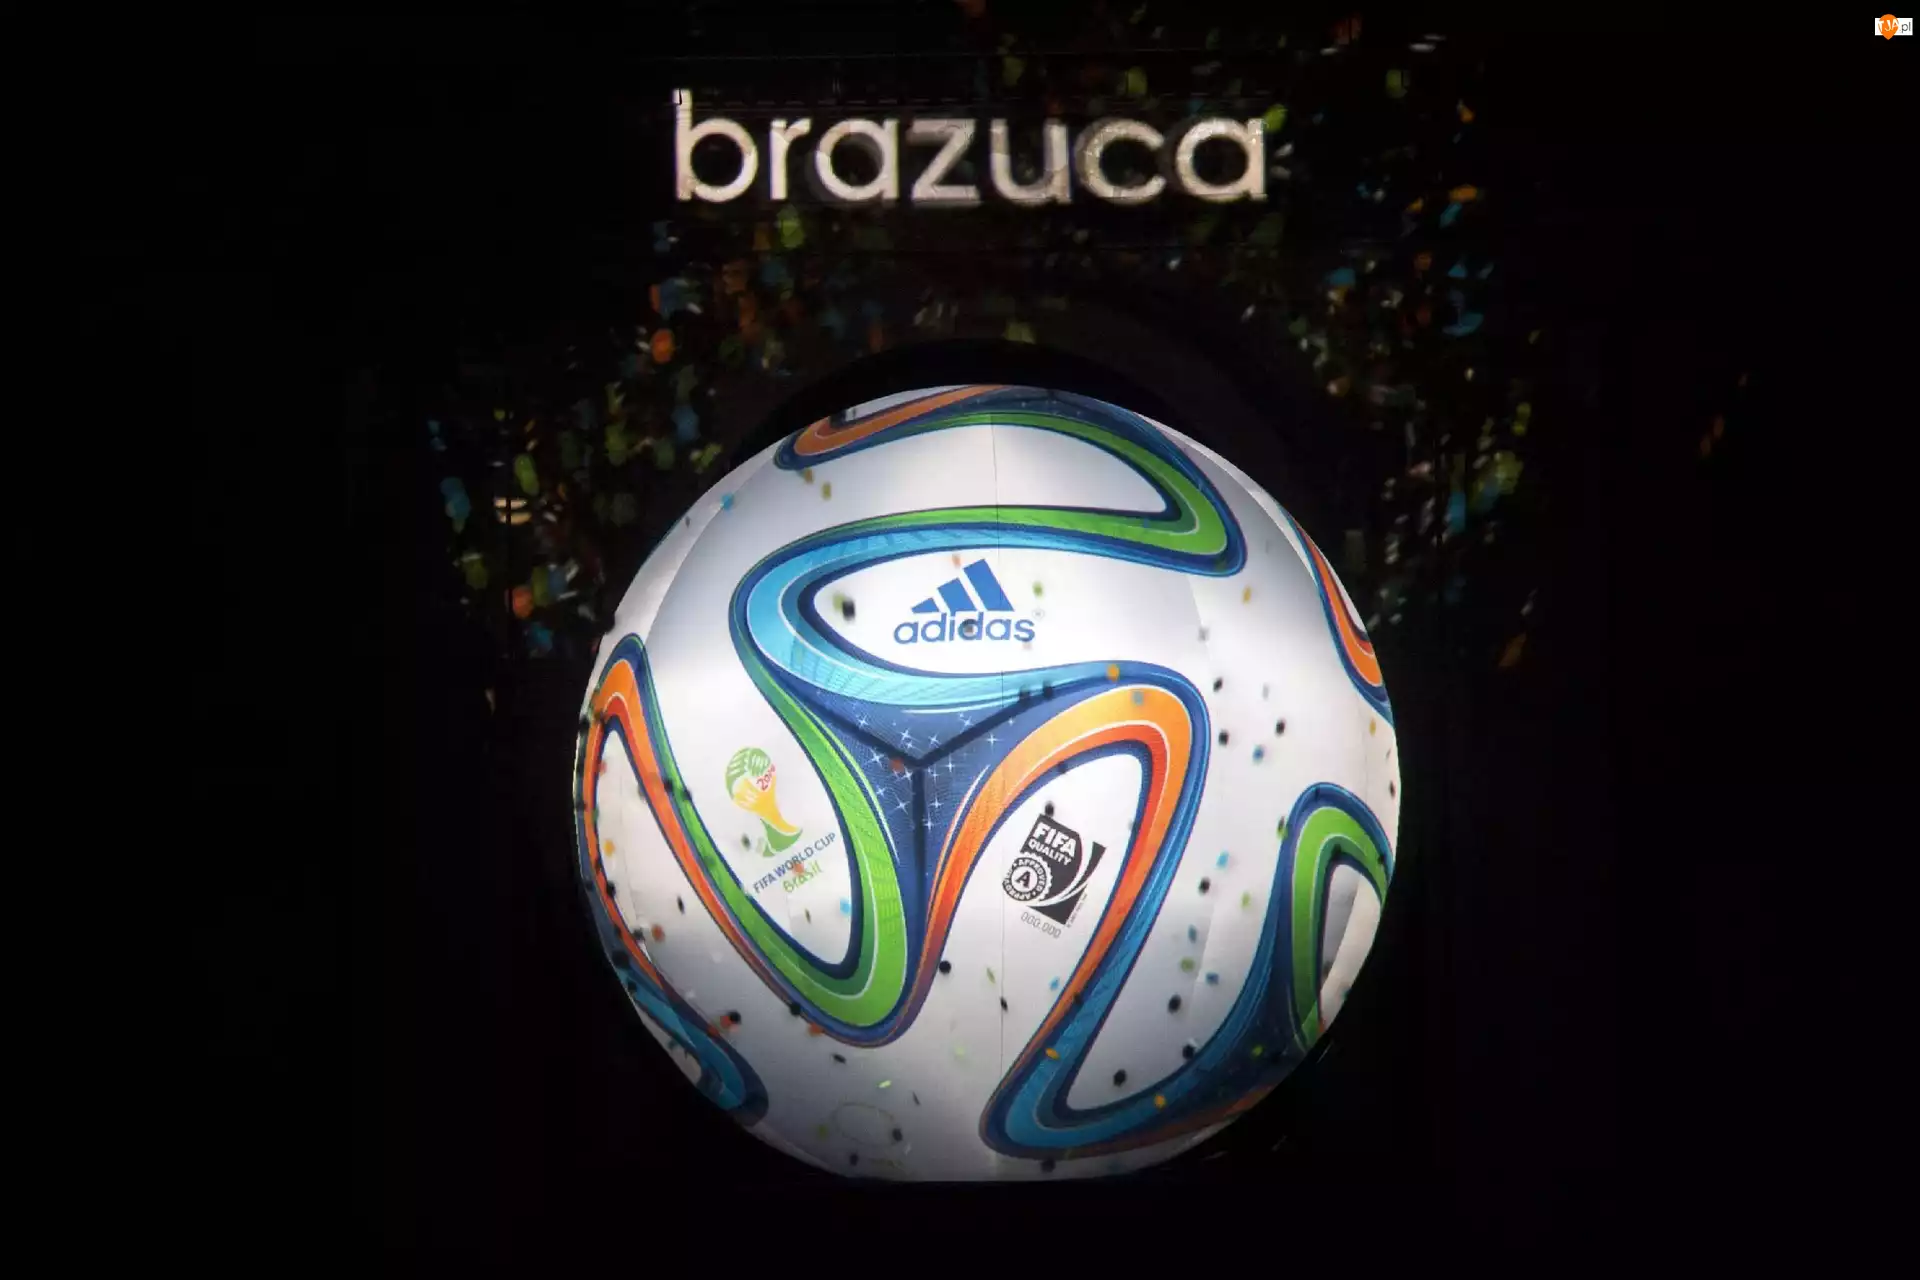 Fifa World Cup 2014, Oficjalna Piłka, Brazuca